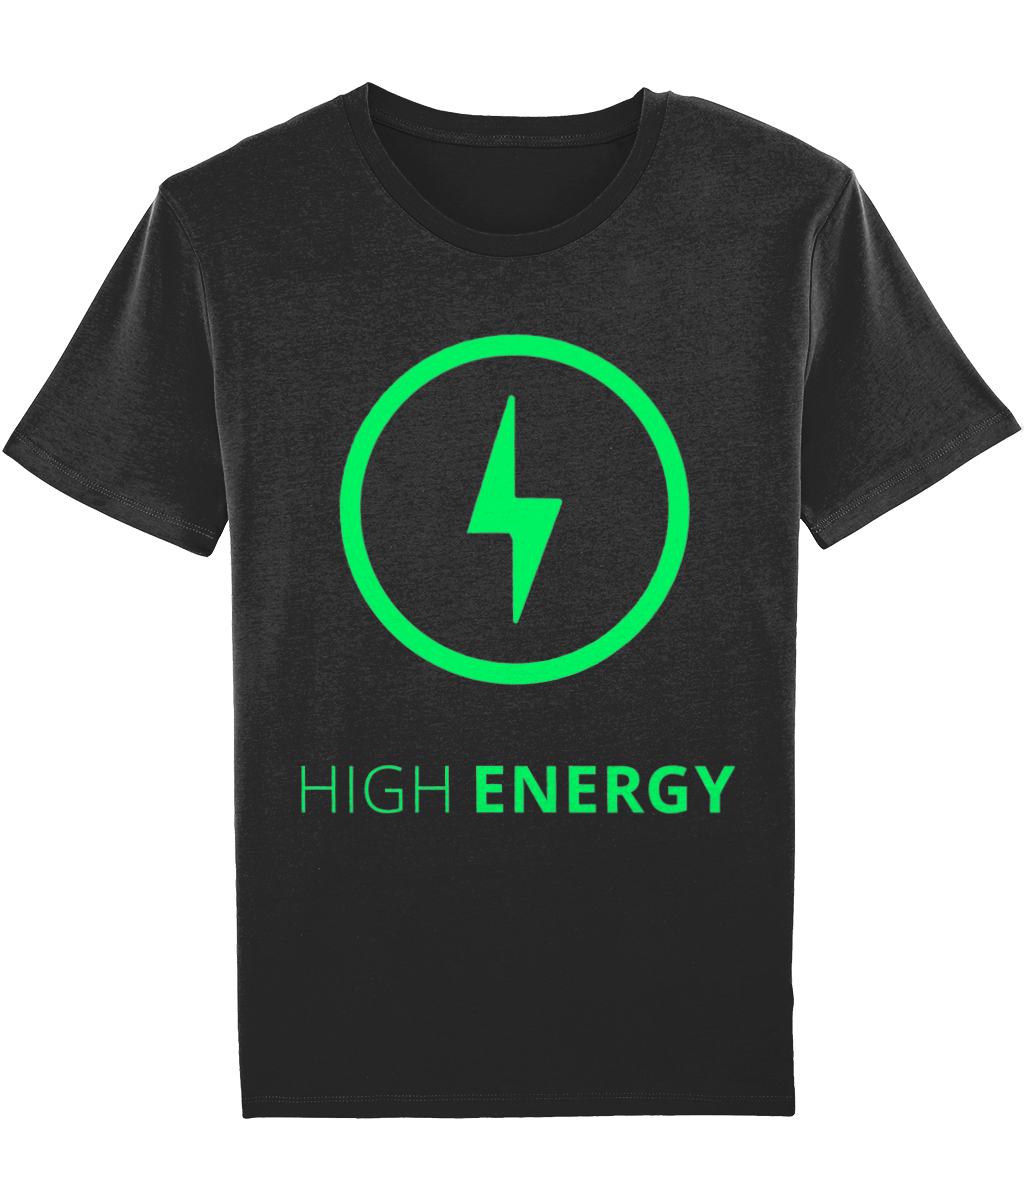 HIGH ENERGY MEN'S T-SHIRT